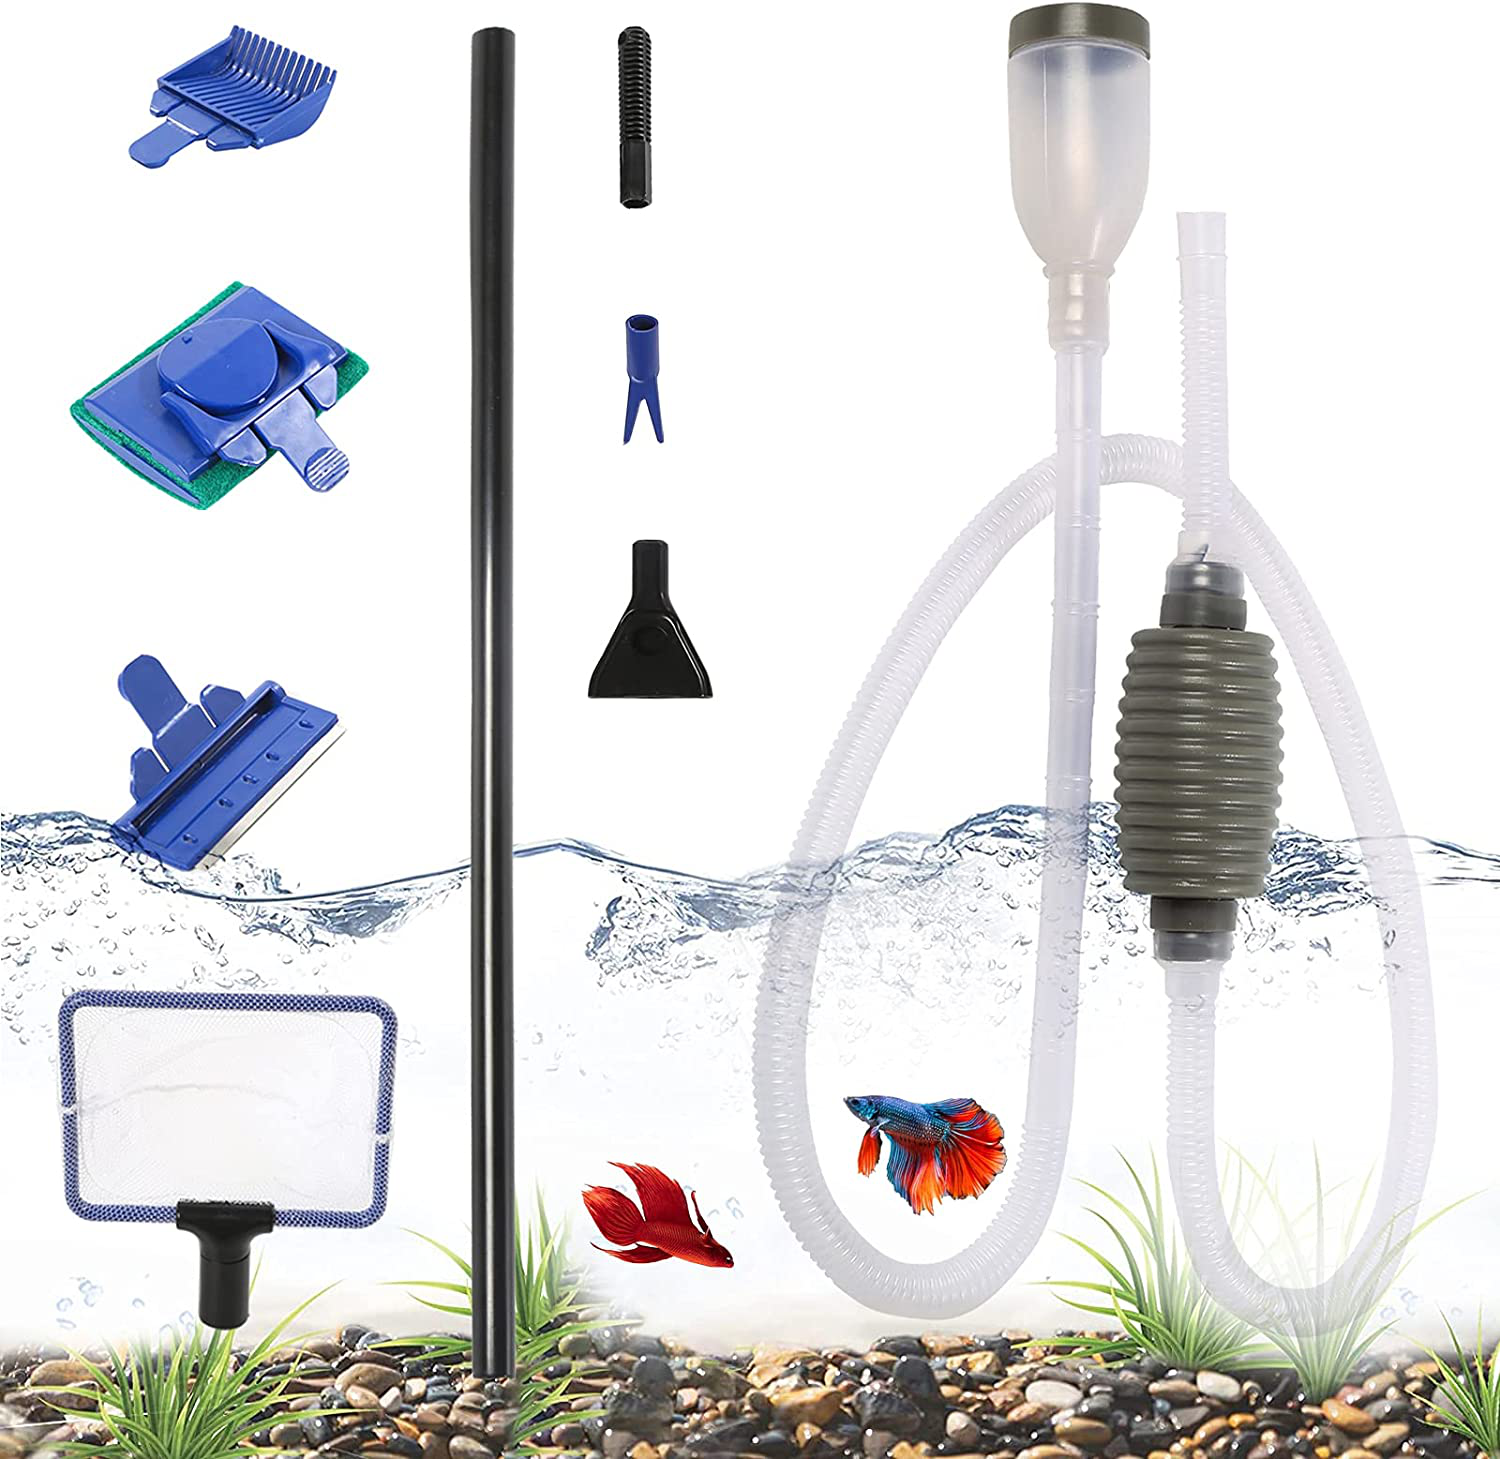 Fish Tank Cleaning Tools, Aquarium Gravel Cleaner Siphon Fish Tank